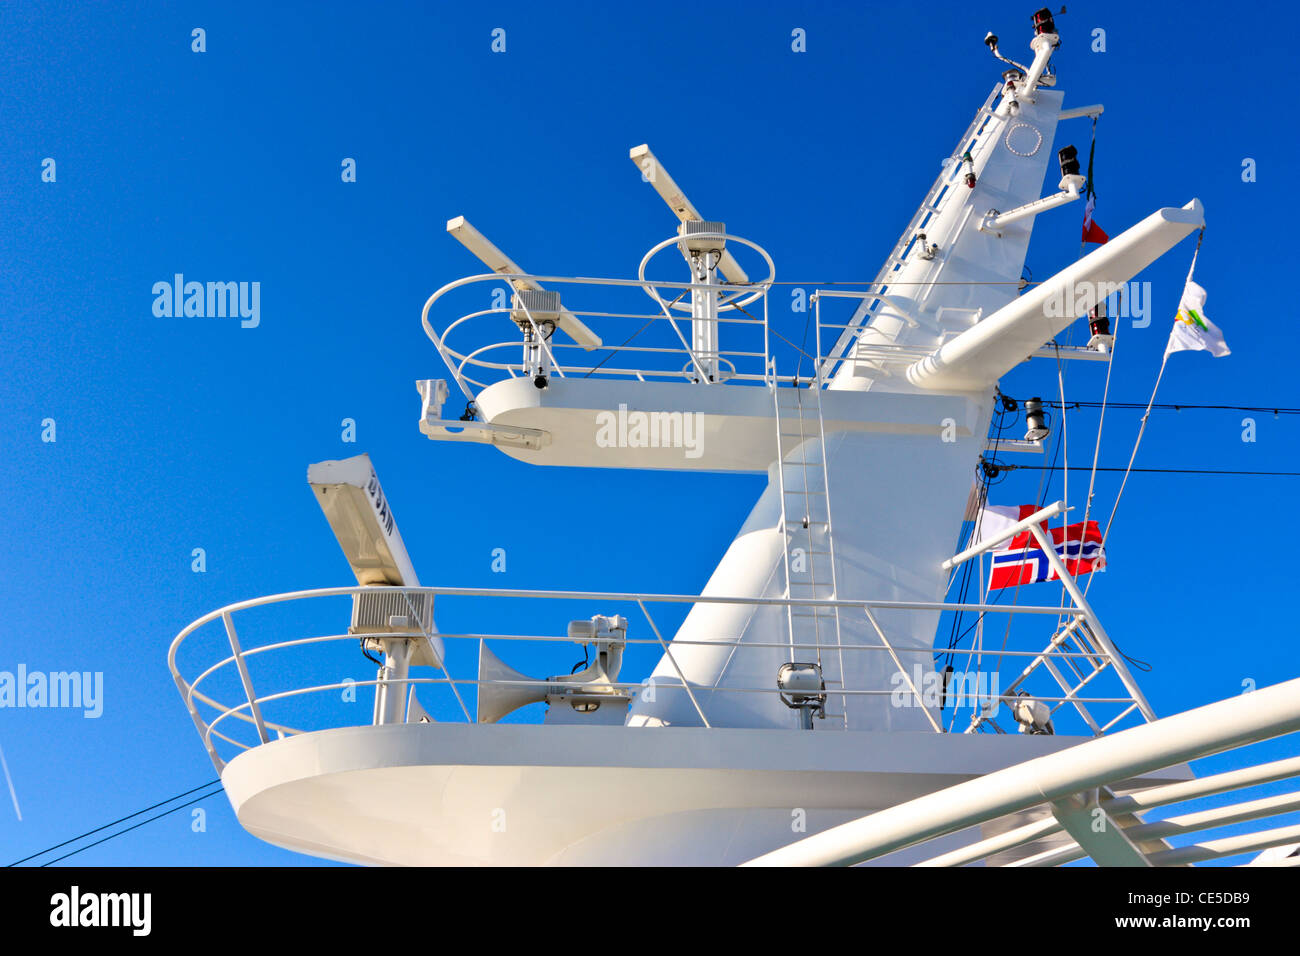 Radar mast ship hi-res stock photography and images - Alamy